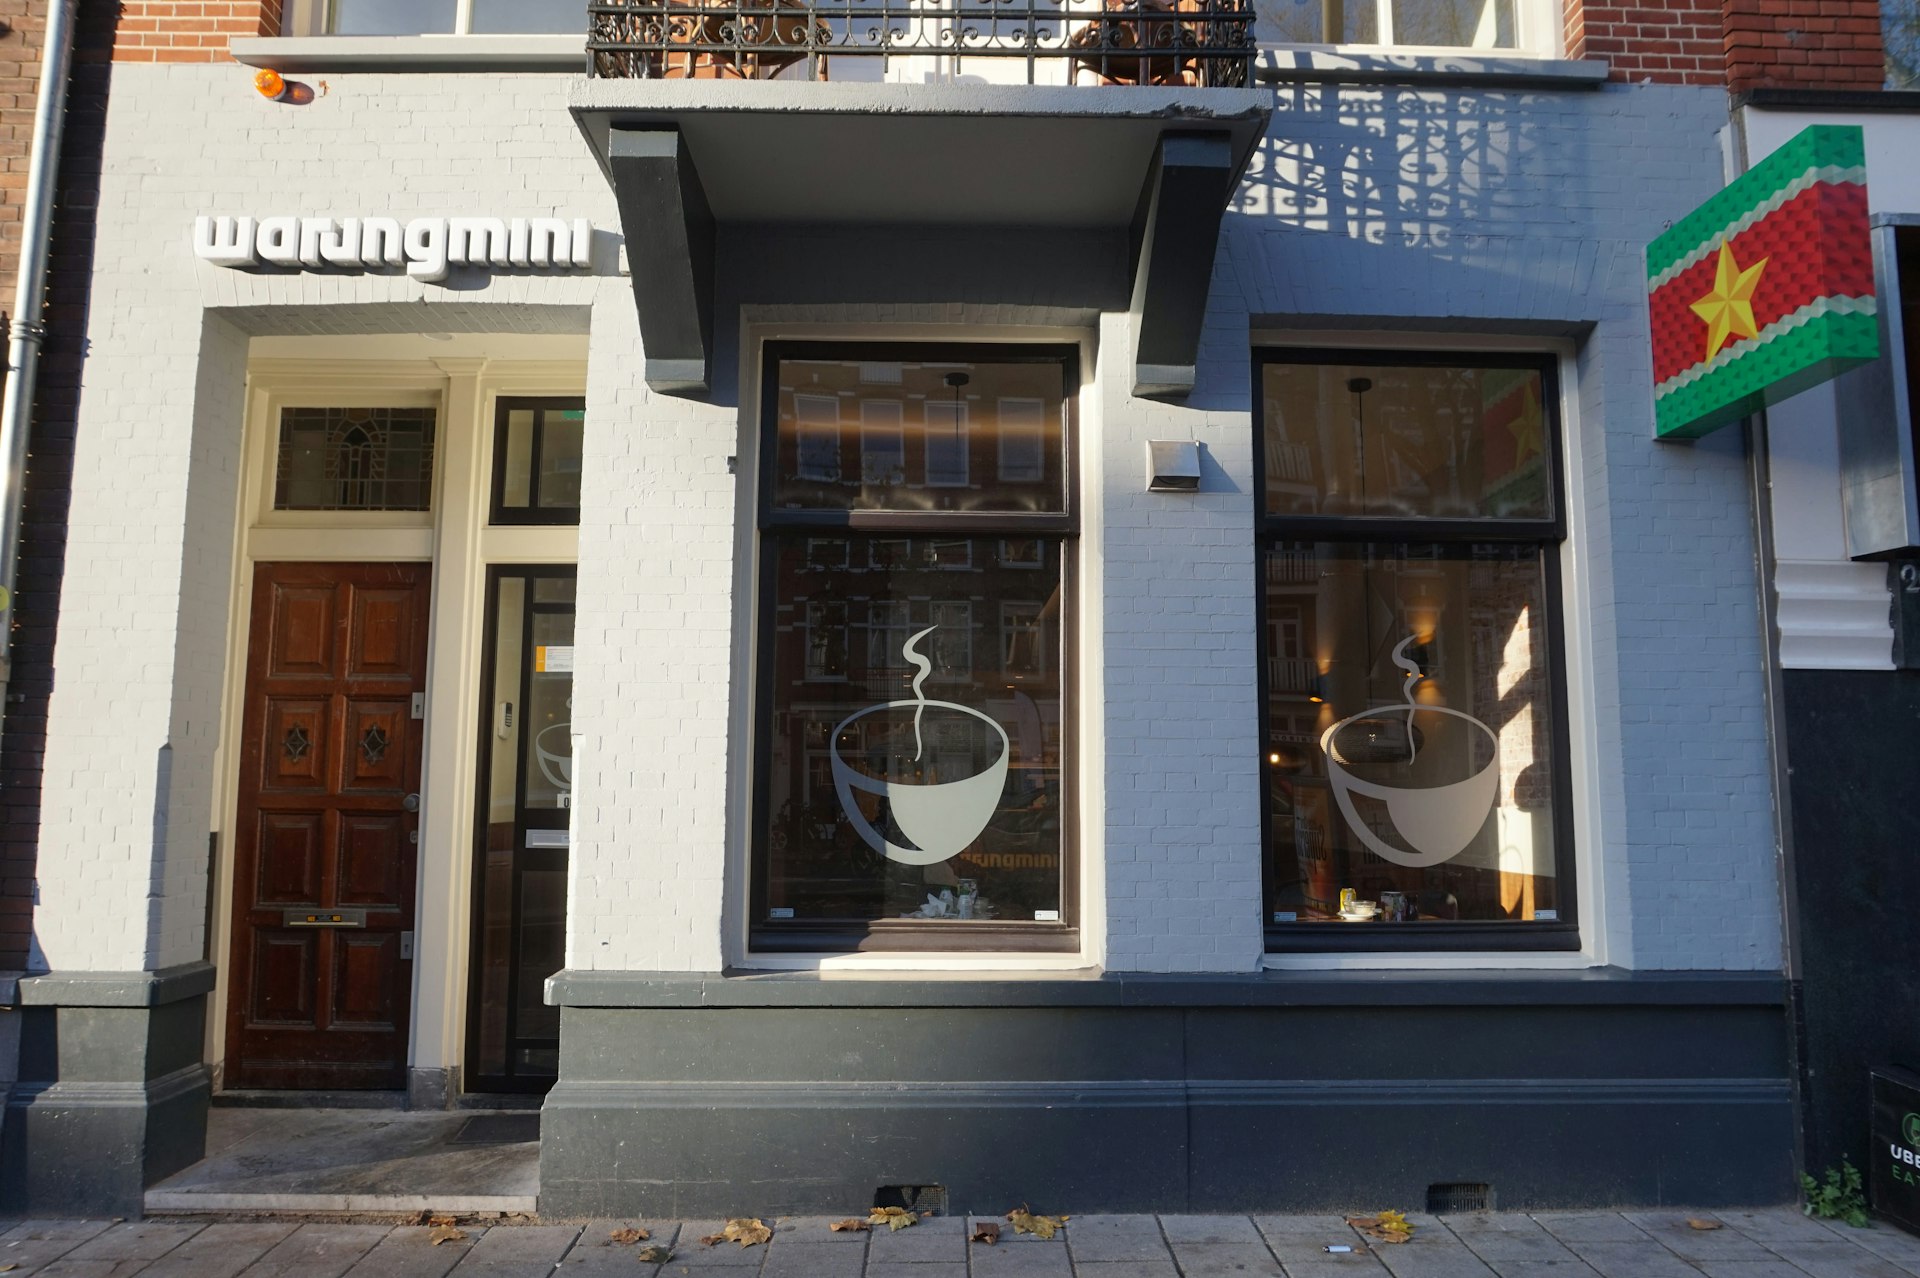 The exterior of Warung Mini Ceintuurbaan restaurant in Amsterdam, the Netherlands